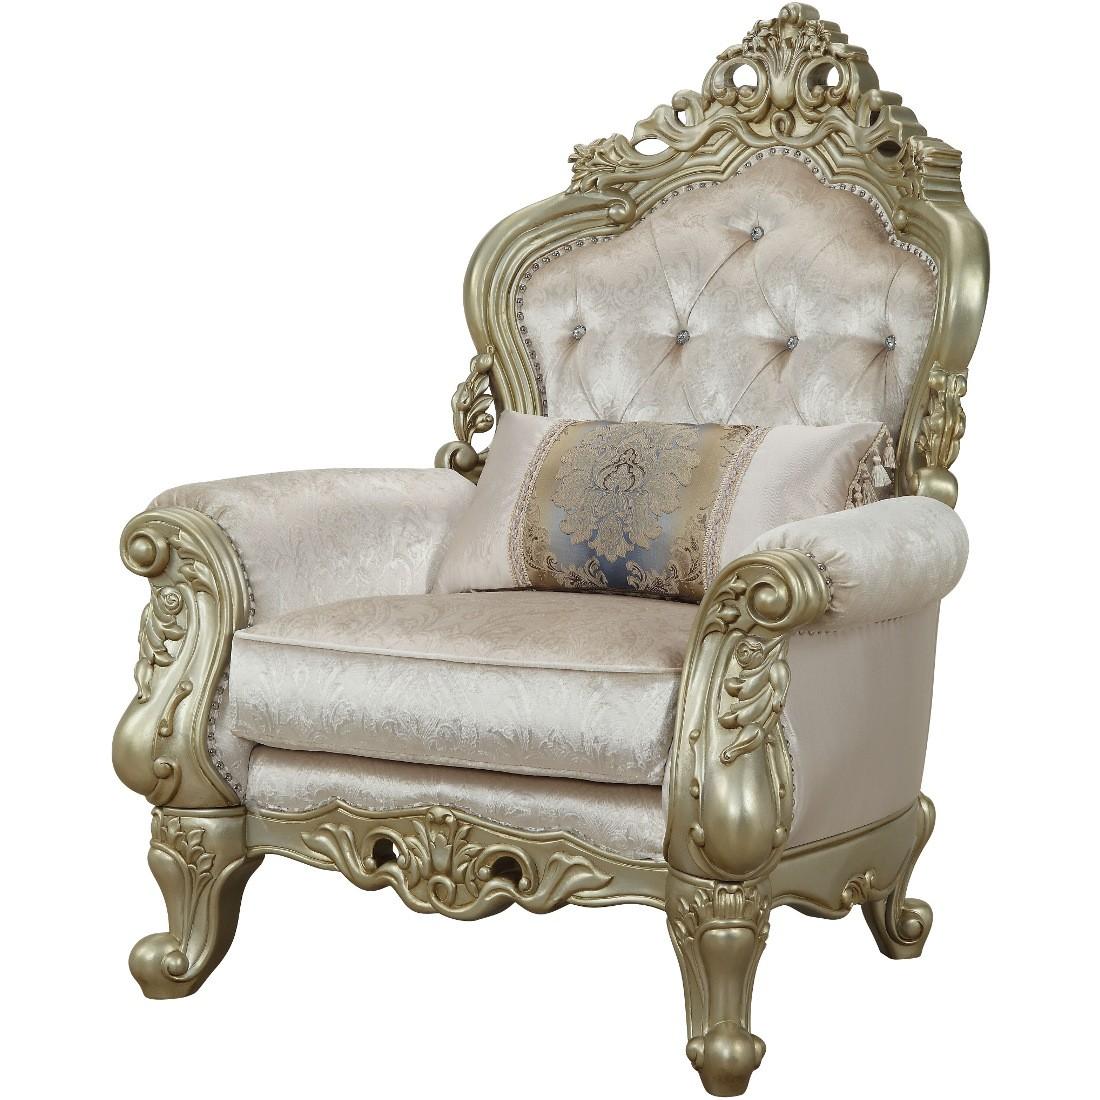 Classic, Traditional Arm Chairs Gorsedd-52442 Gorsedd-52442 in Antique White, Cream Fabric